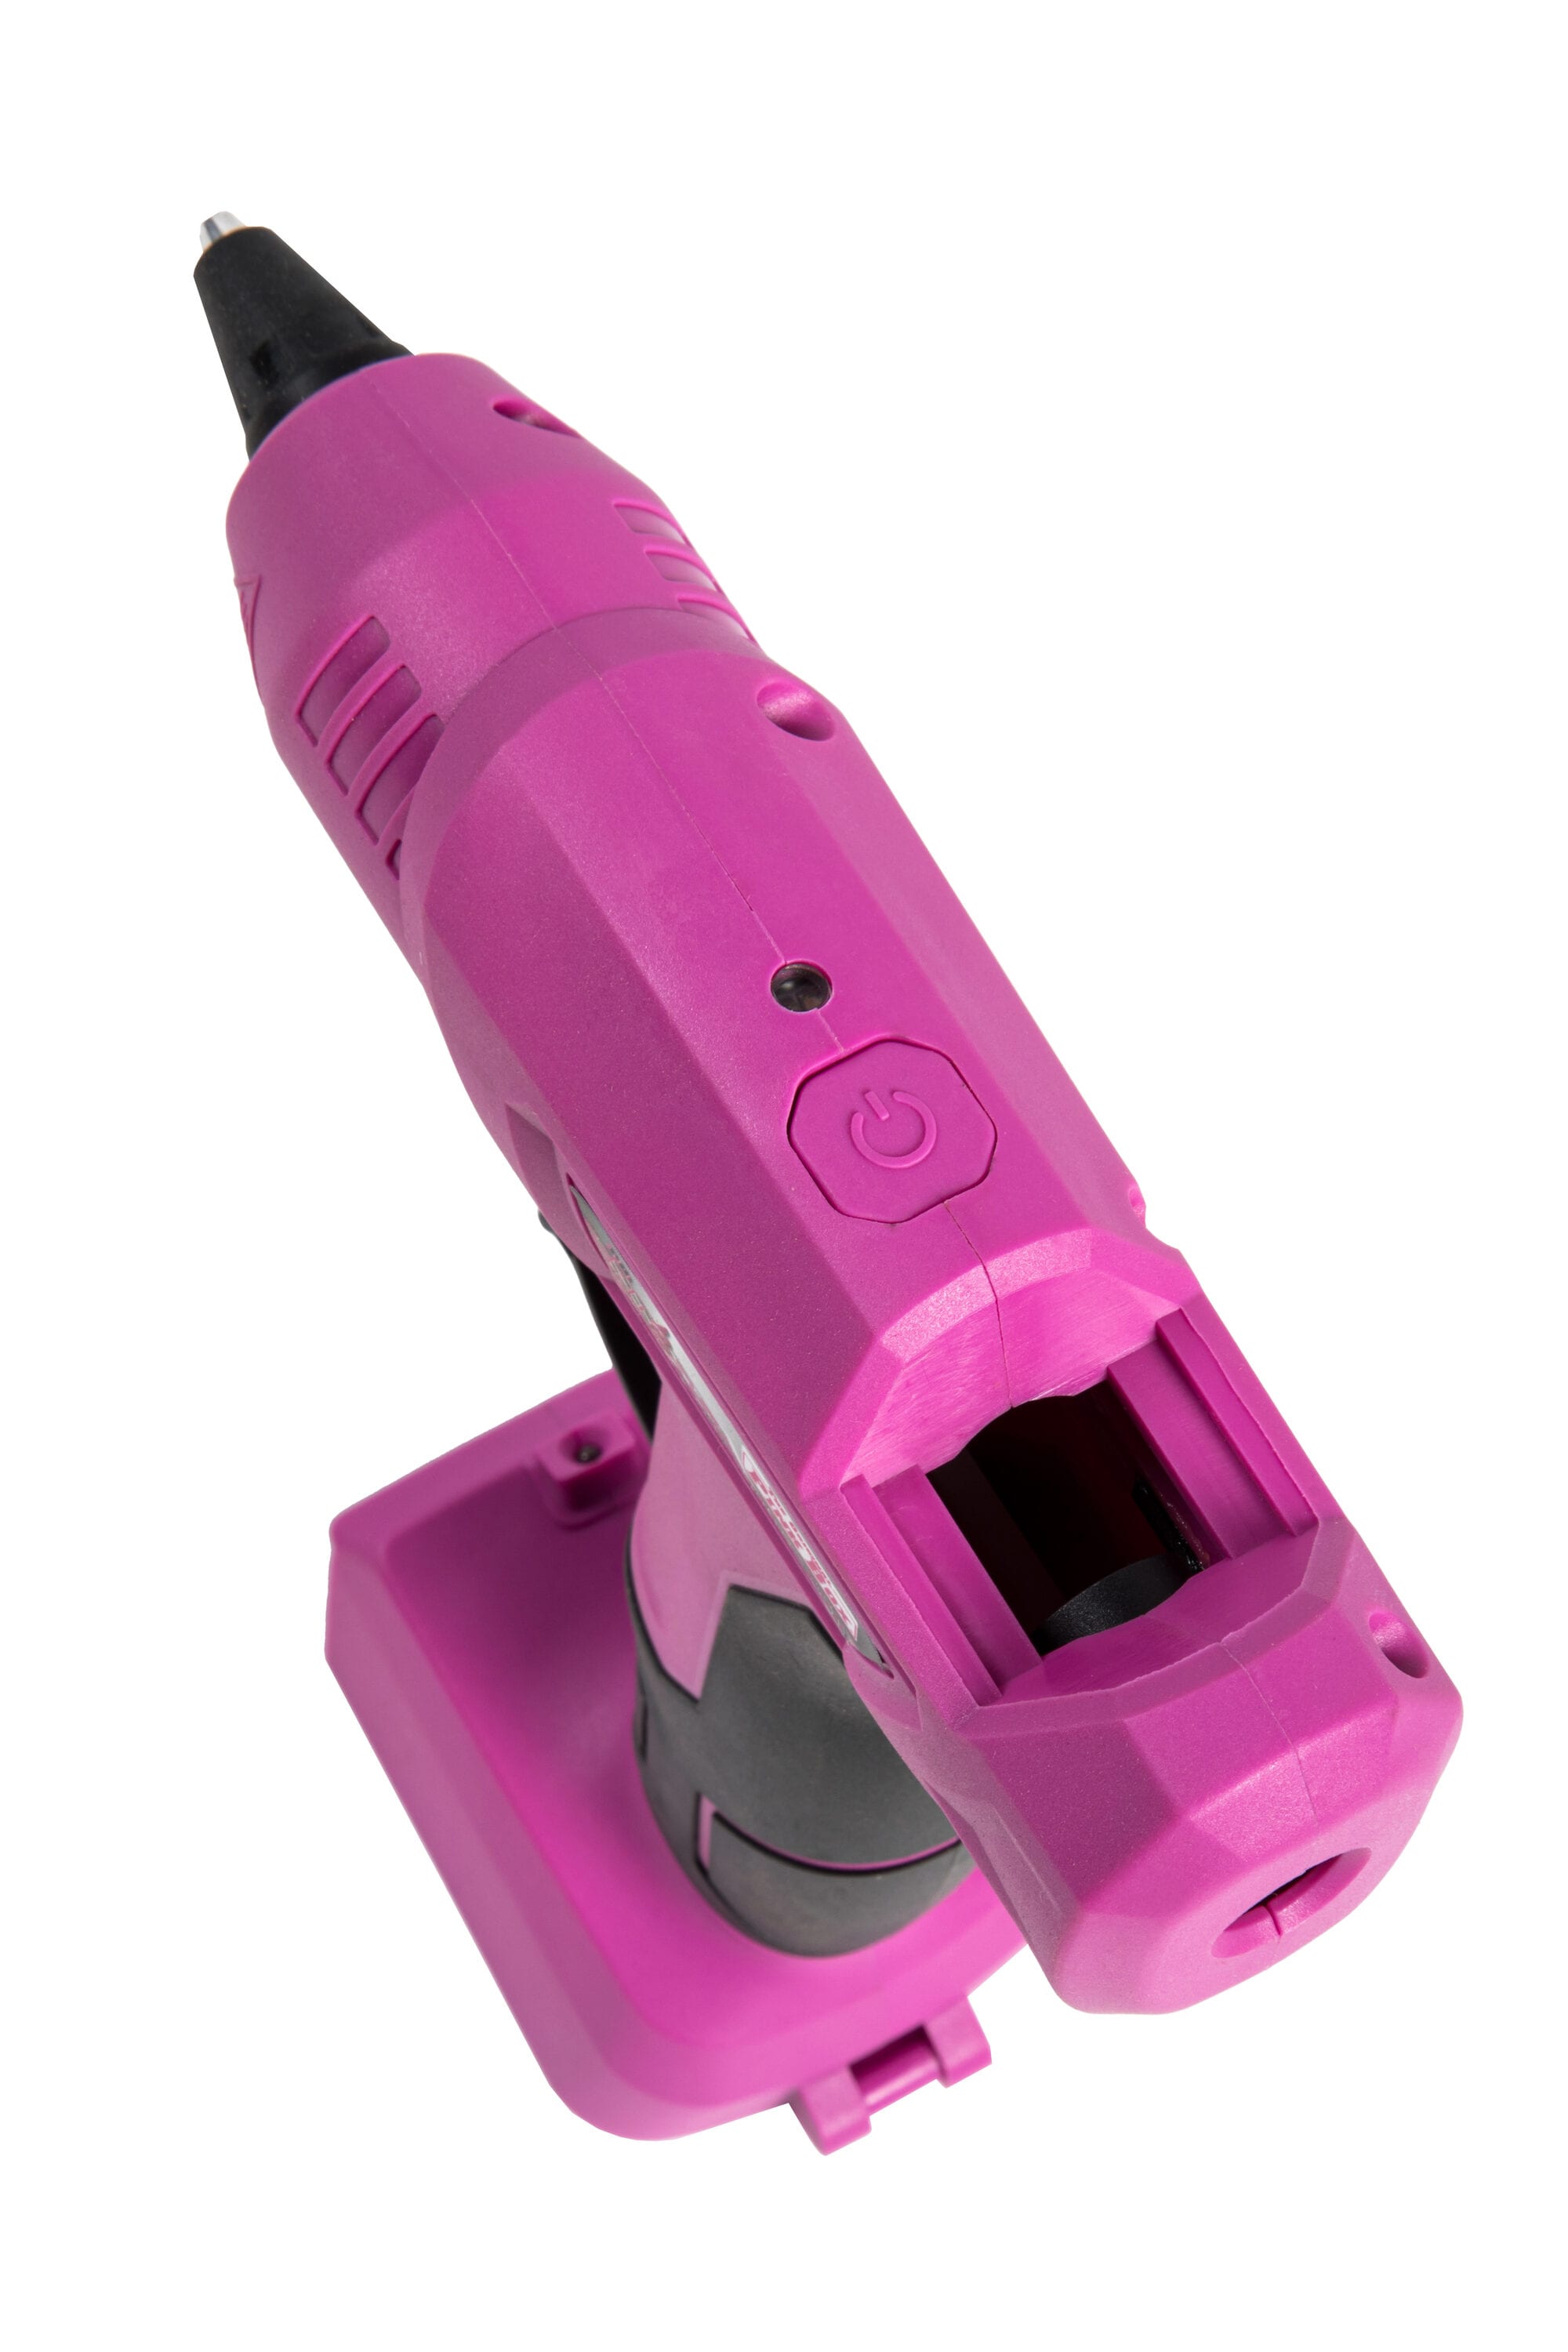 The Original Pink Box 20V Cordless Glue Gun - Single Temp, Battery